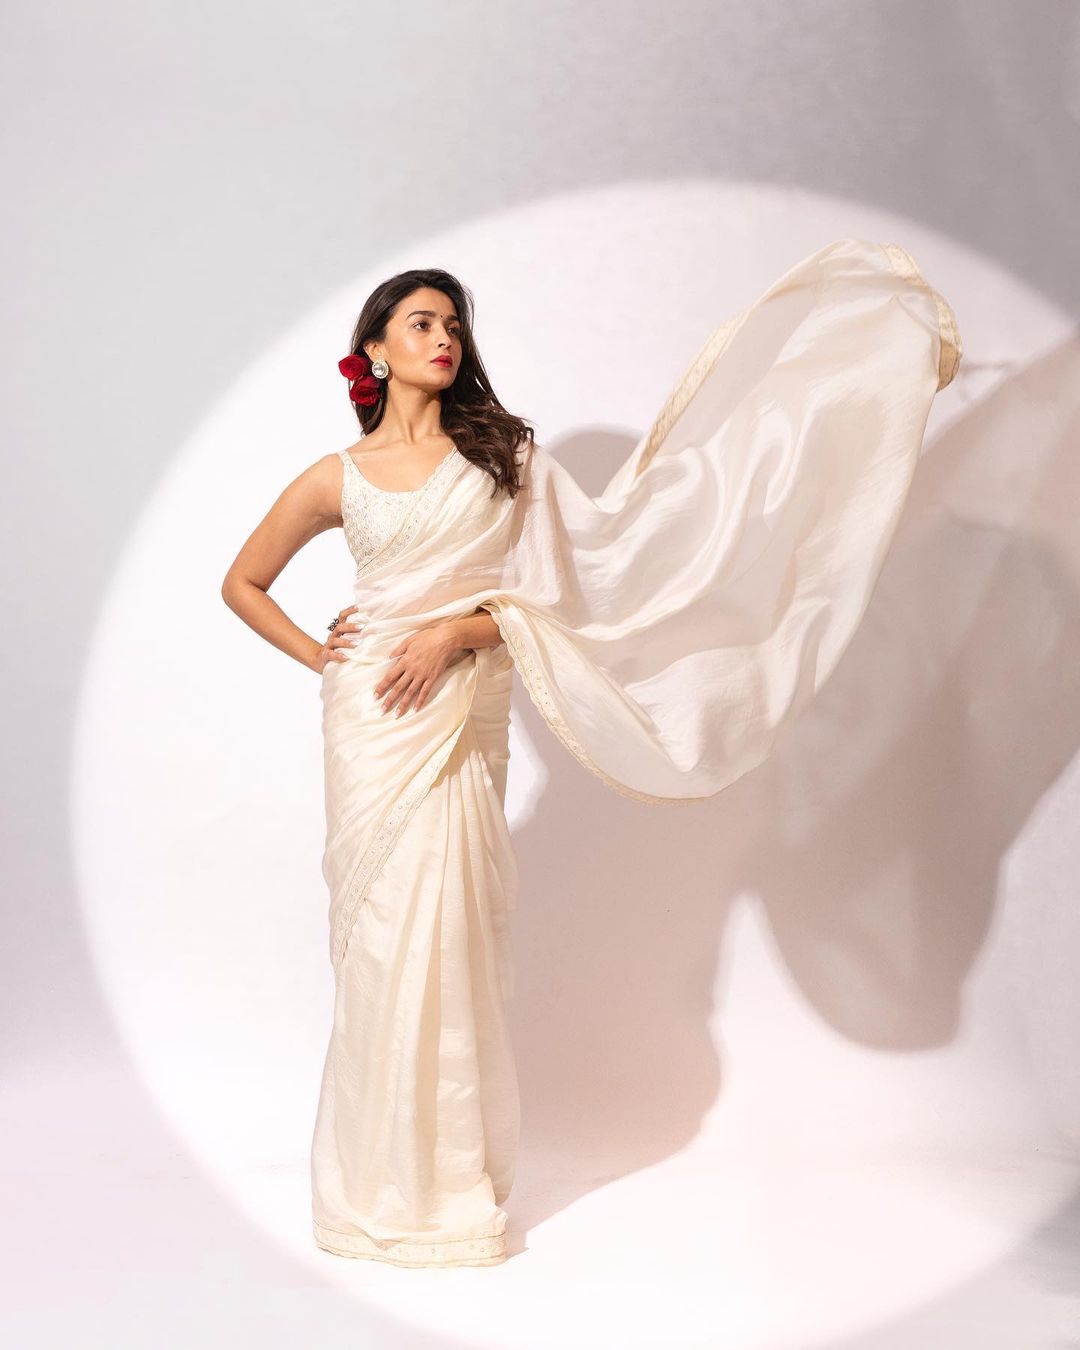 Alia Bhatt looks breathtaking in the all-white saree